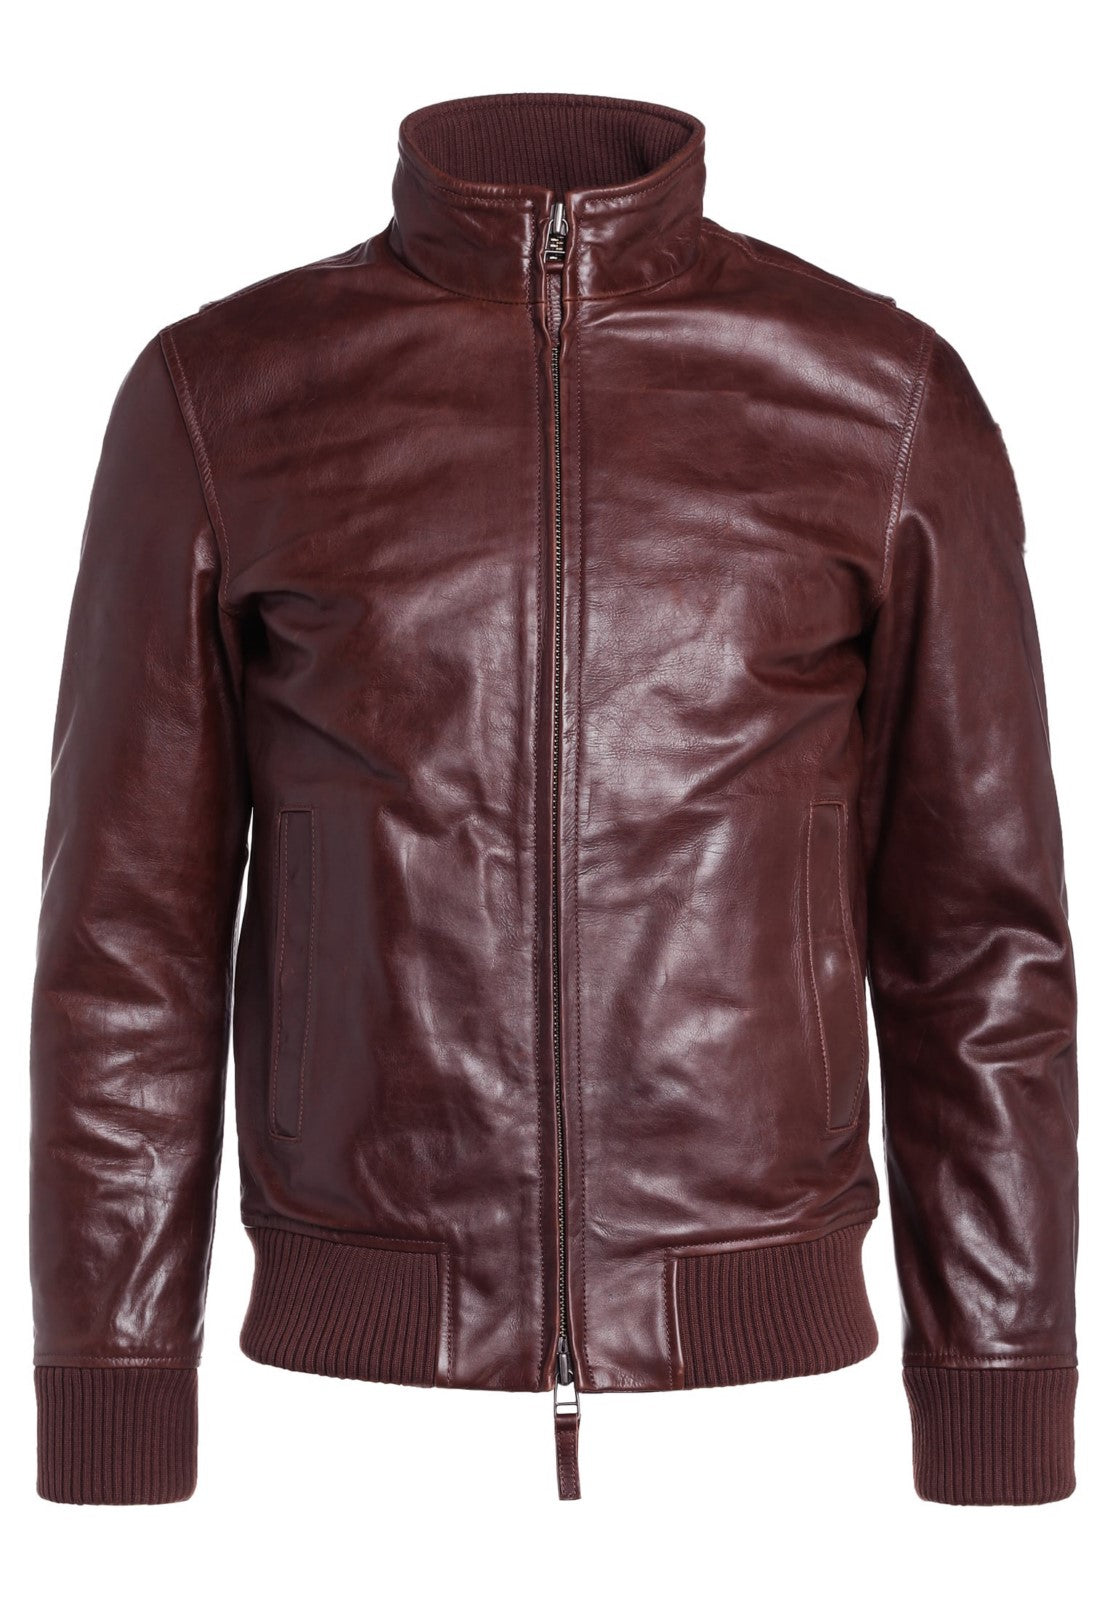 Men's Brown Genuine Leather Bomber Jacket MZ08